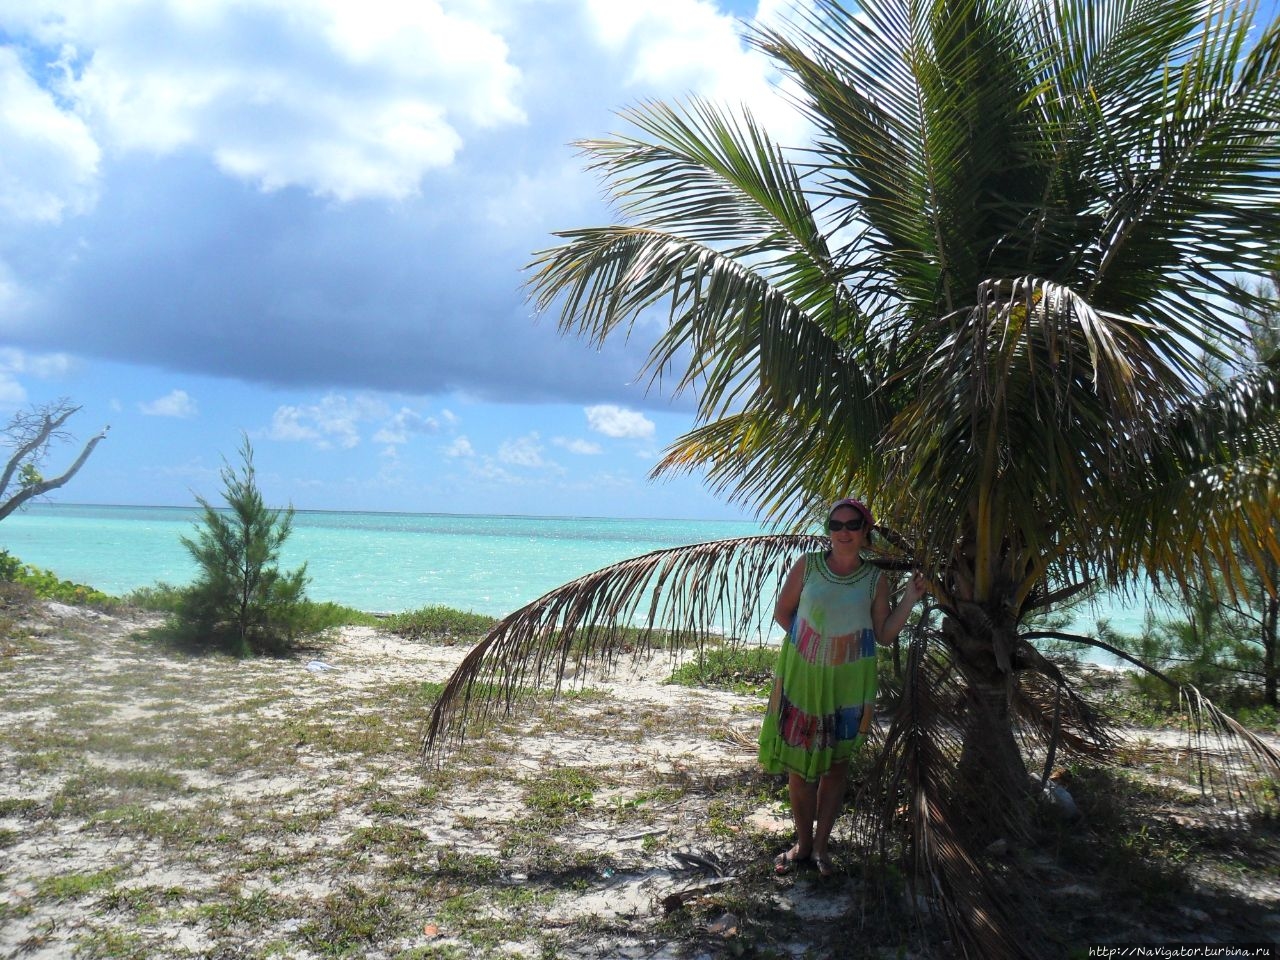 Последние дни на Гранд Багаме, к выходу на Панаму готовы! Выход назначен на15 мая, 2012 г. Лукайя, Багамские острова